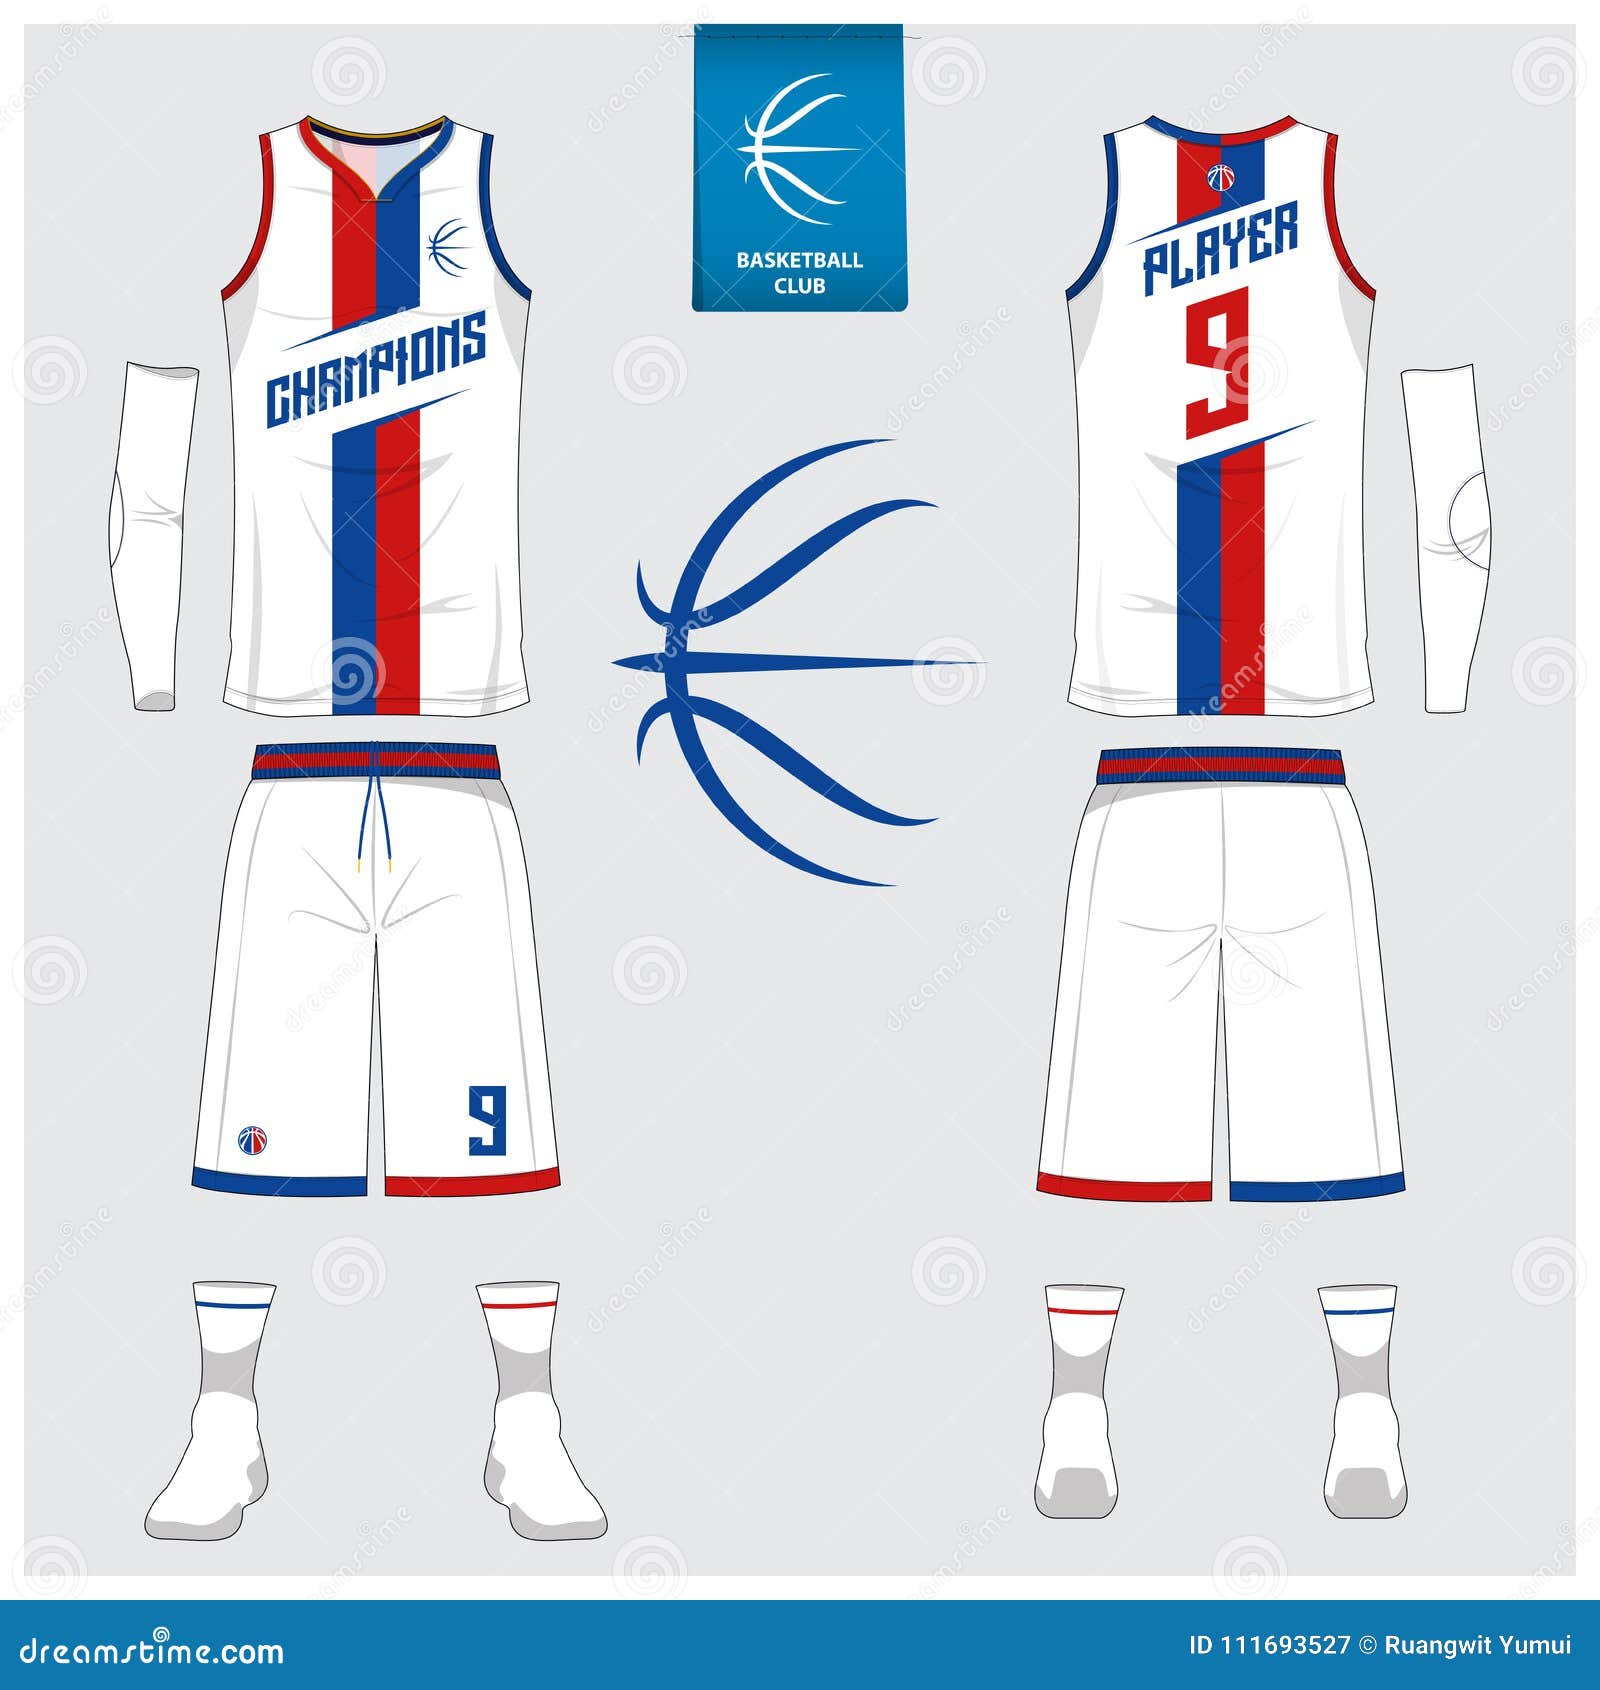 Blank Basketball Uniform Template (5) - TEMPLATES EXAMPLE